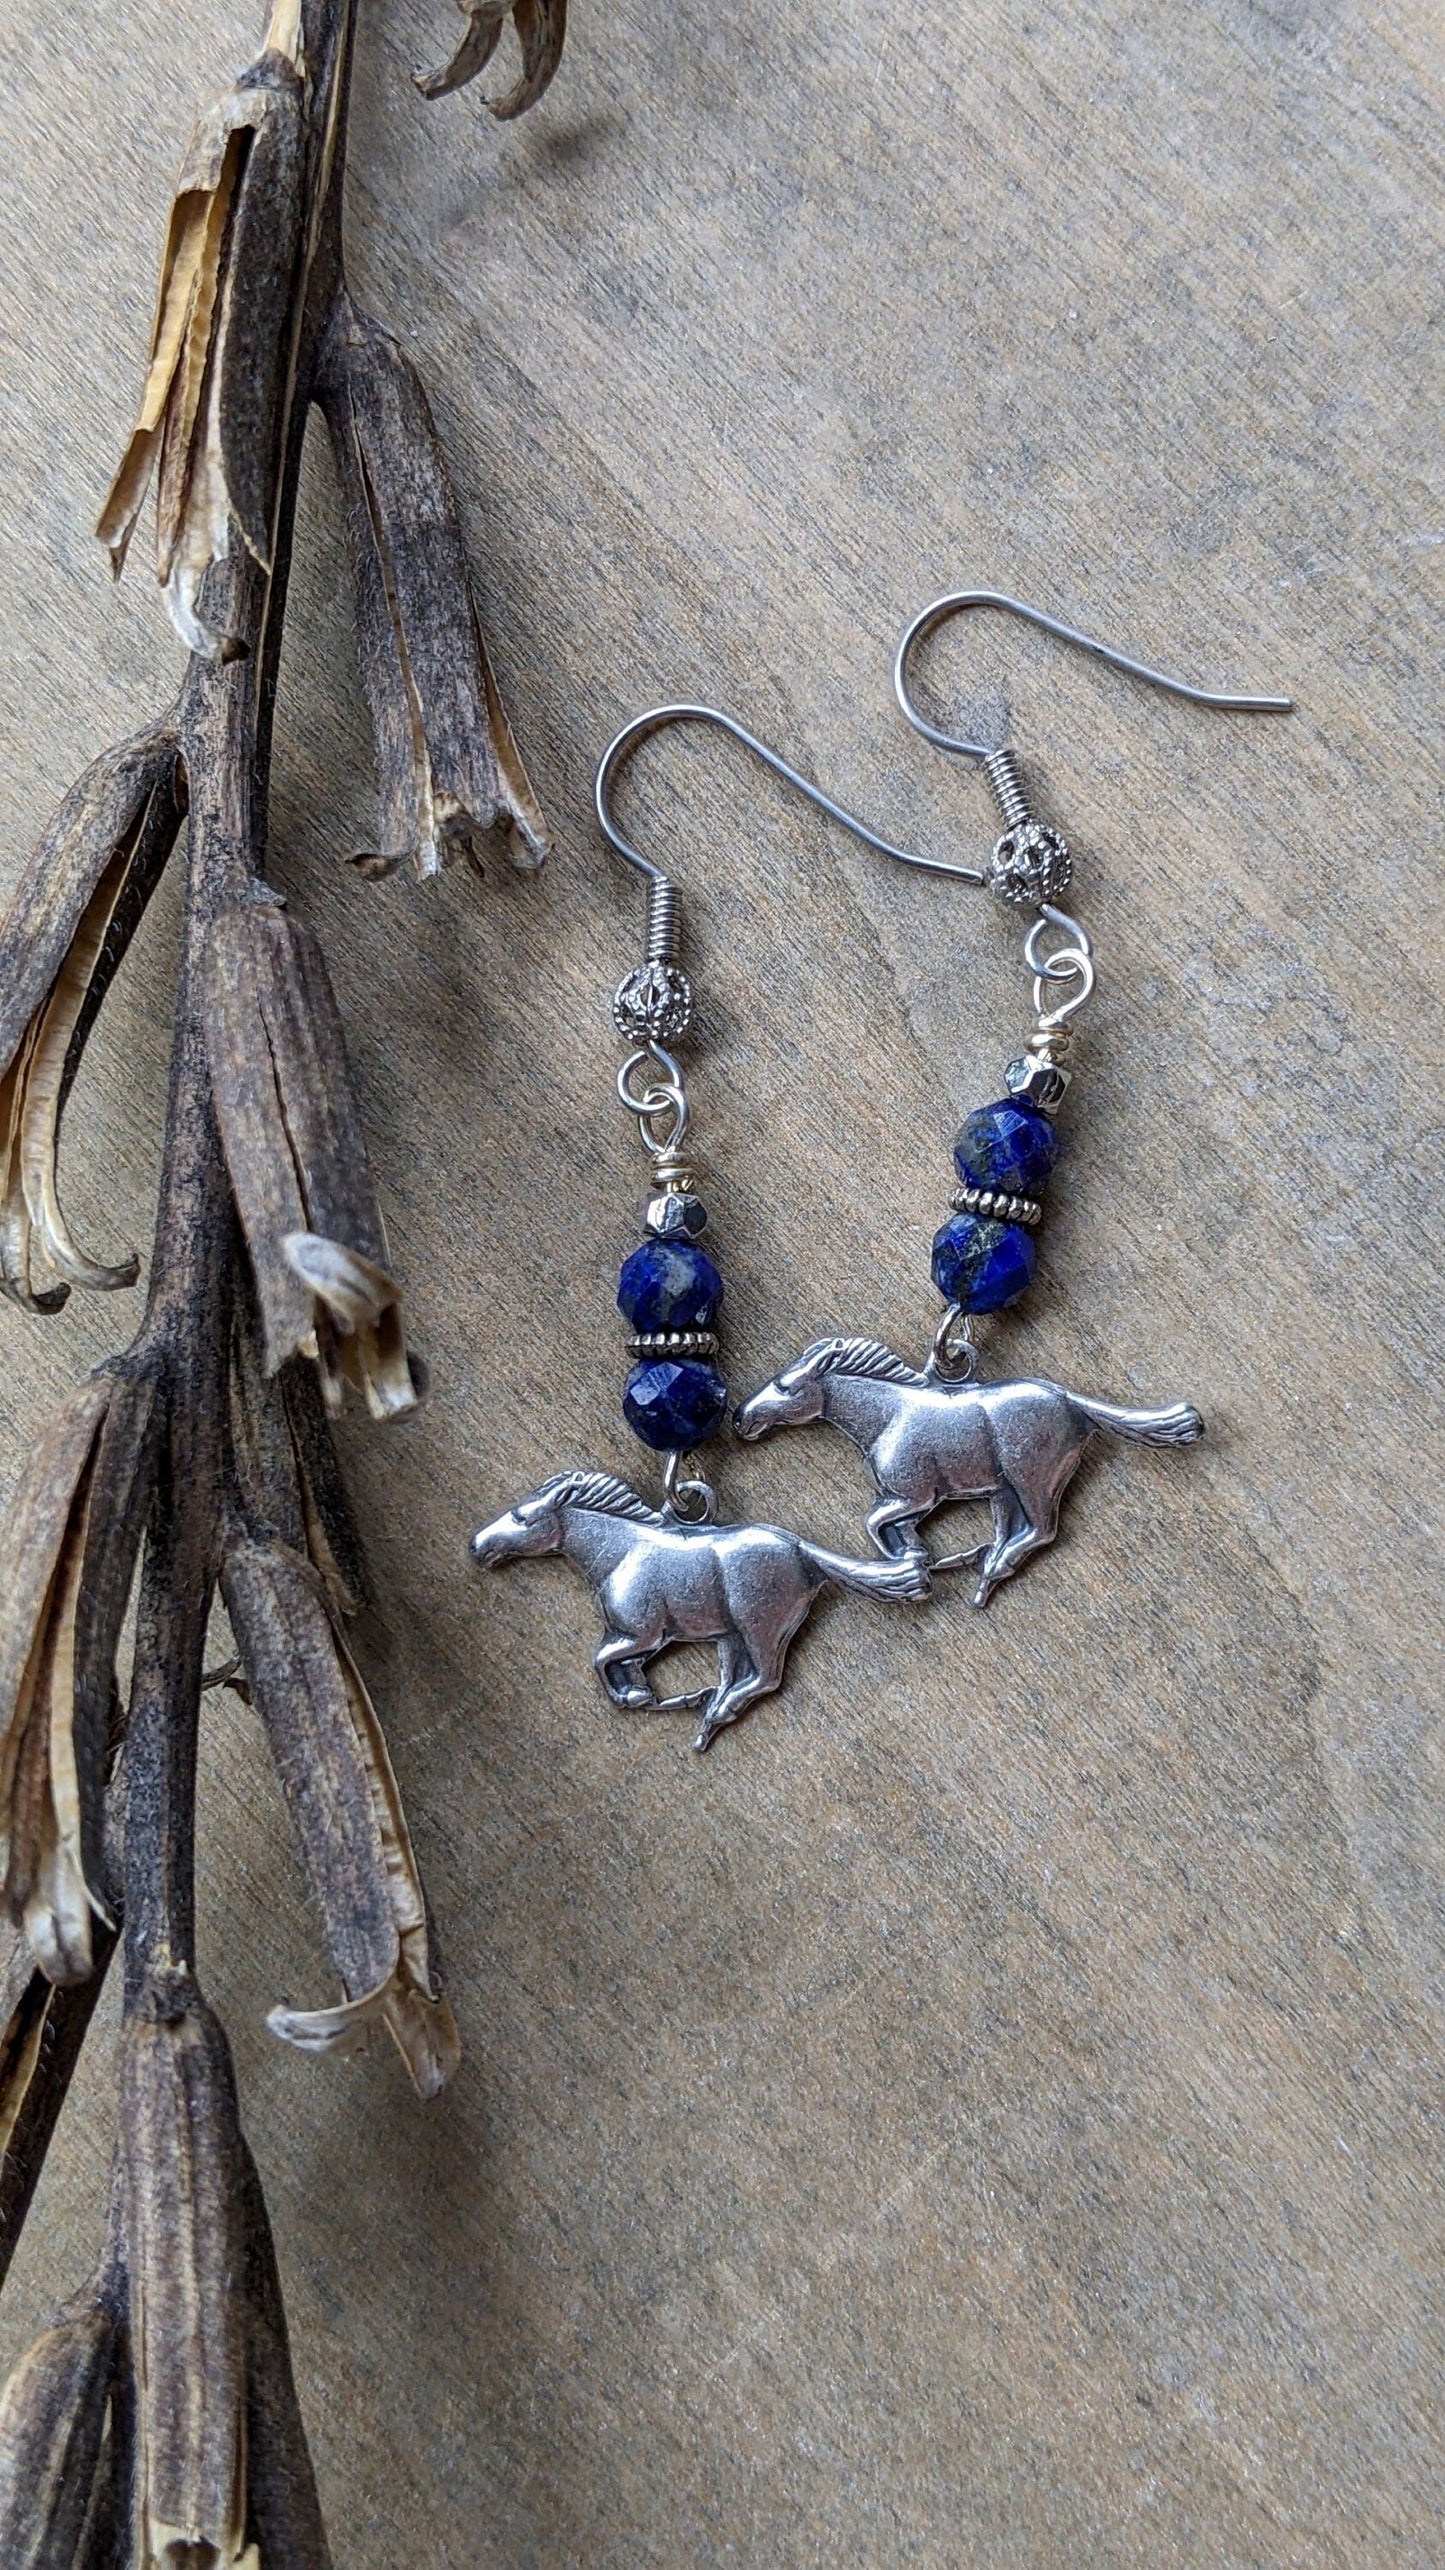 Horse earrings beaded gemstone earrings blue gemstone jewelry